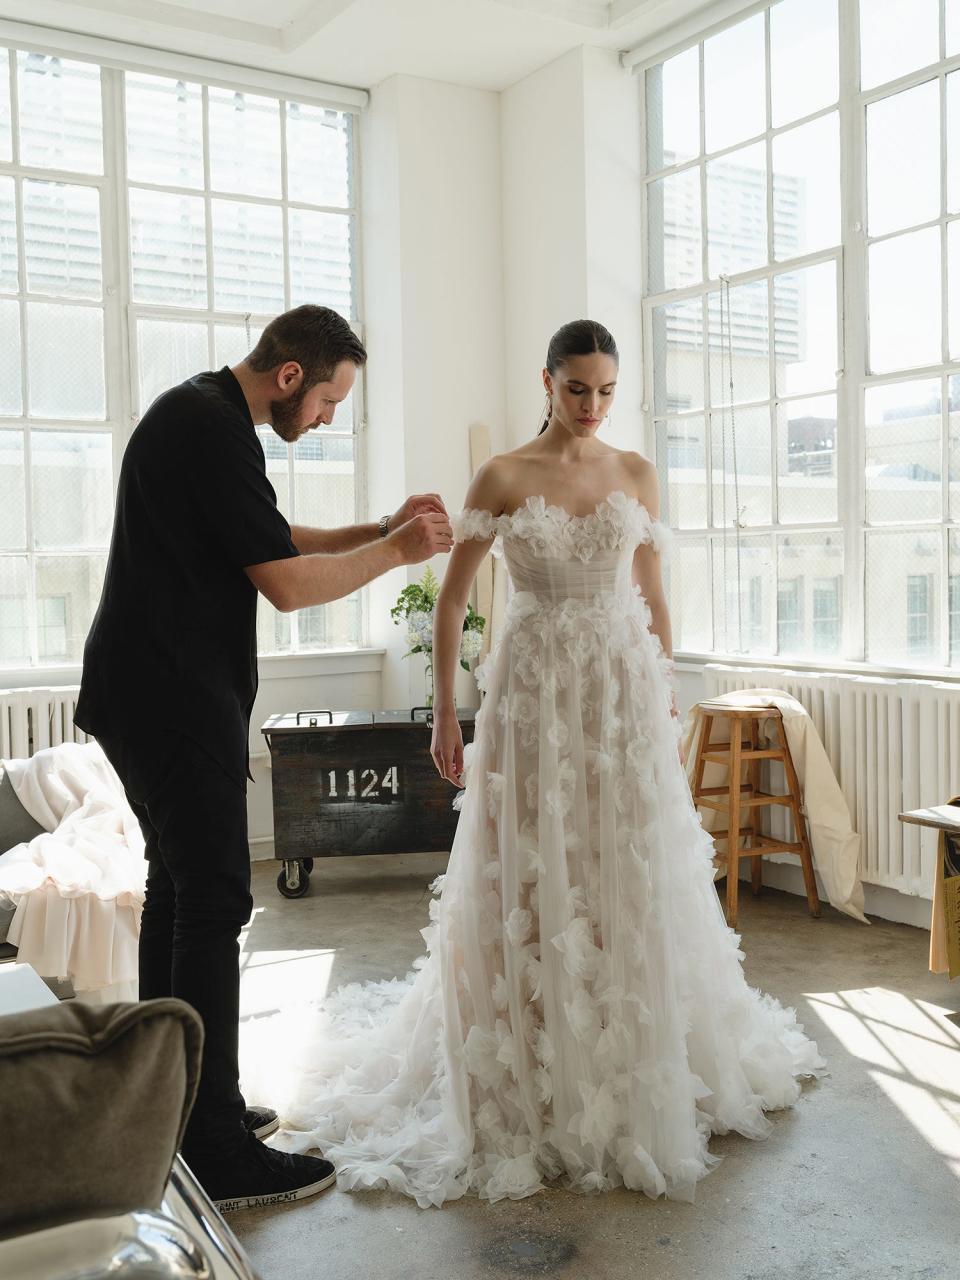 A man makes adjustments to a woman's wedding dress.